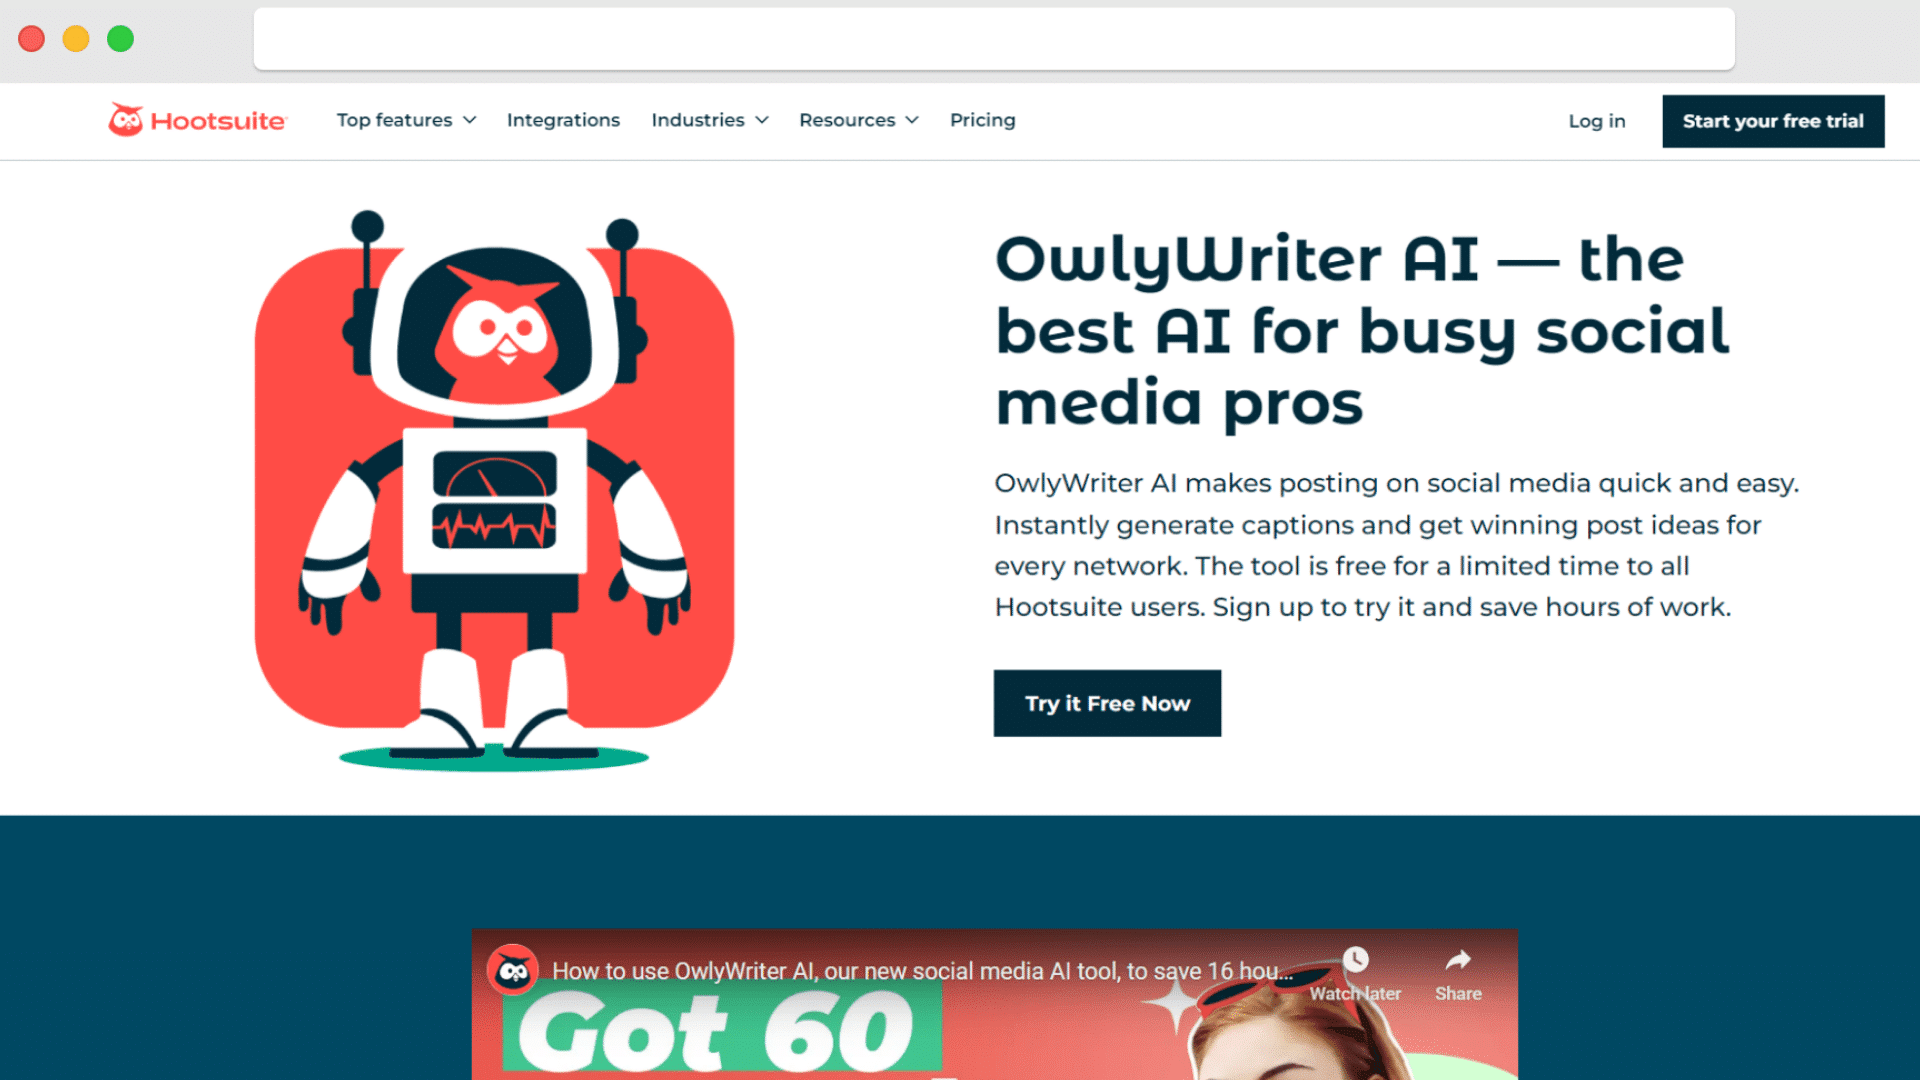 HootSuite's OwlyWriter